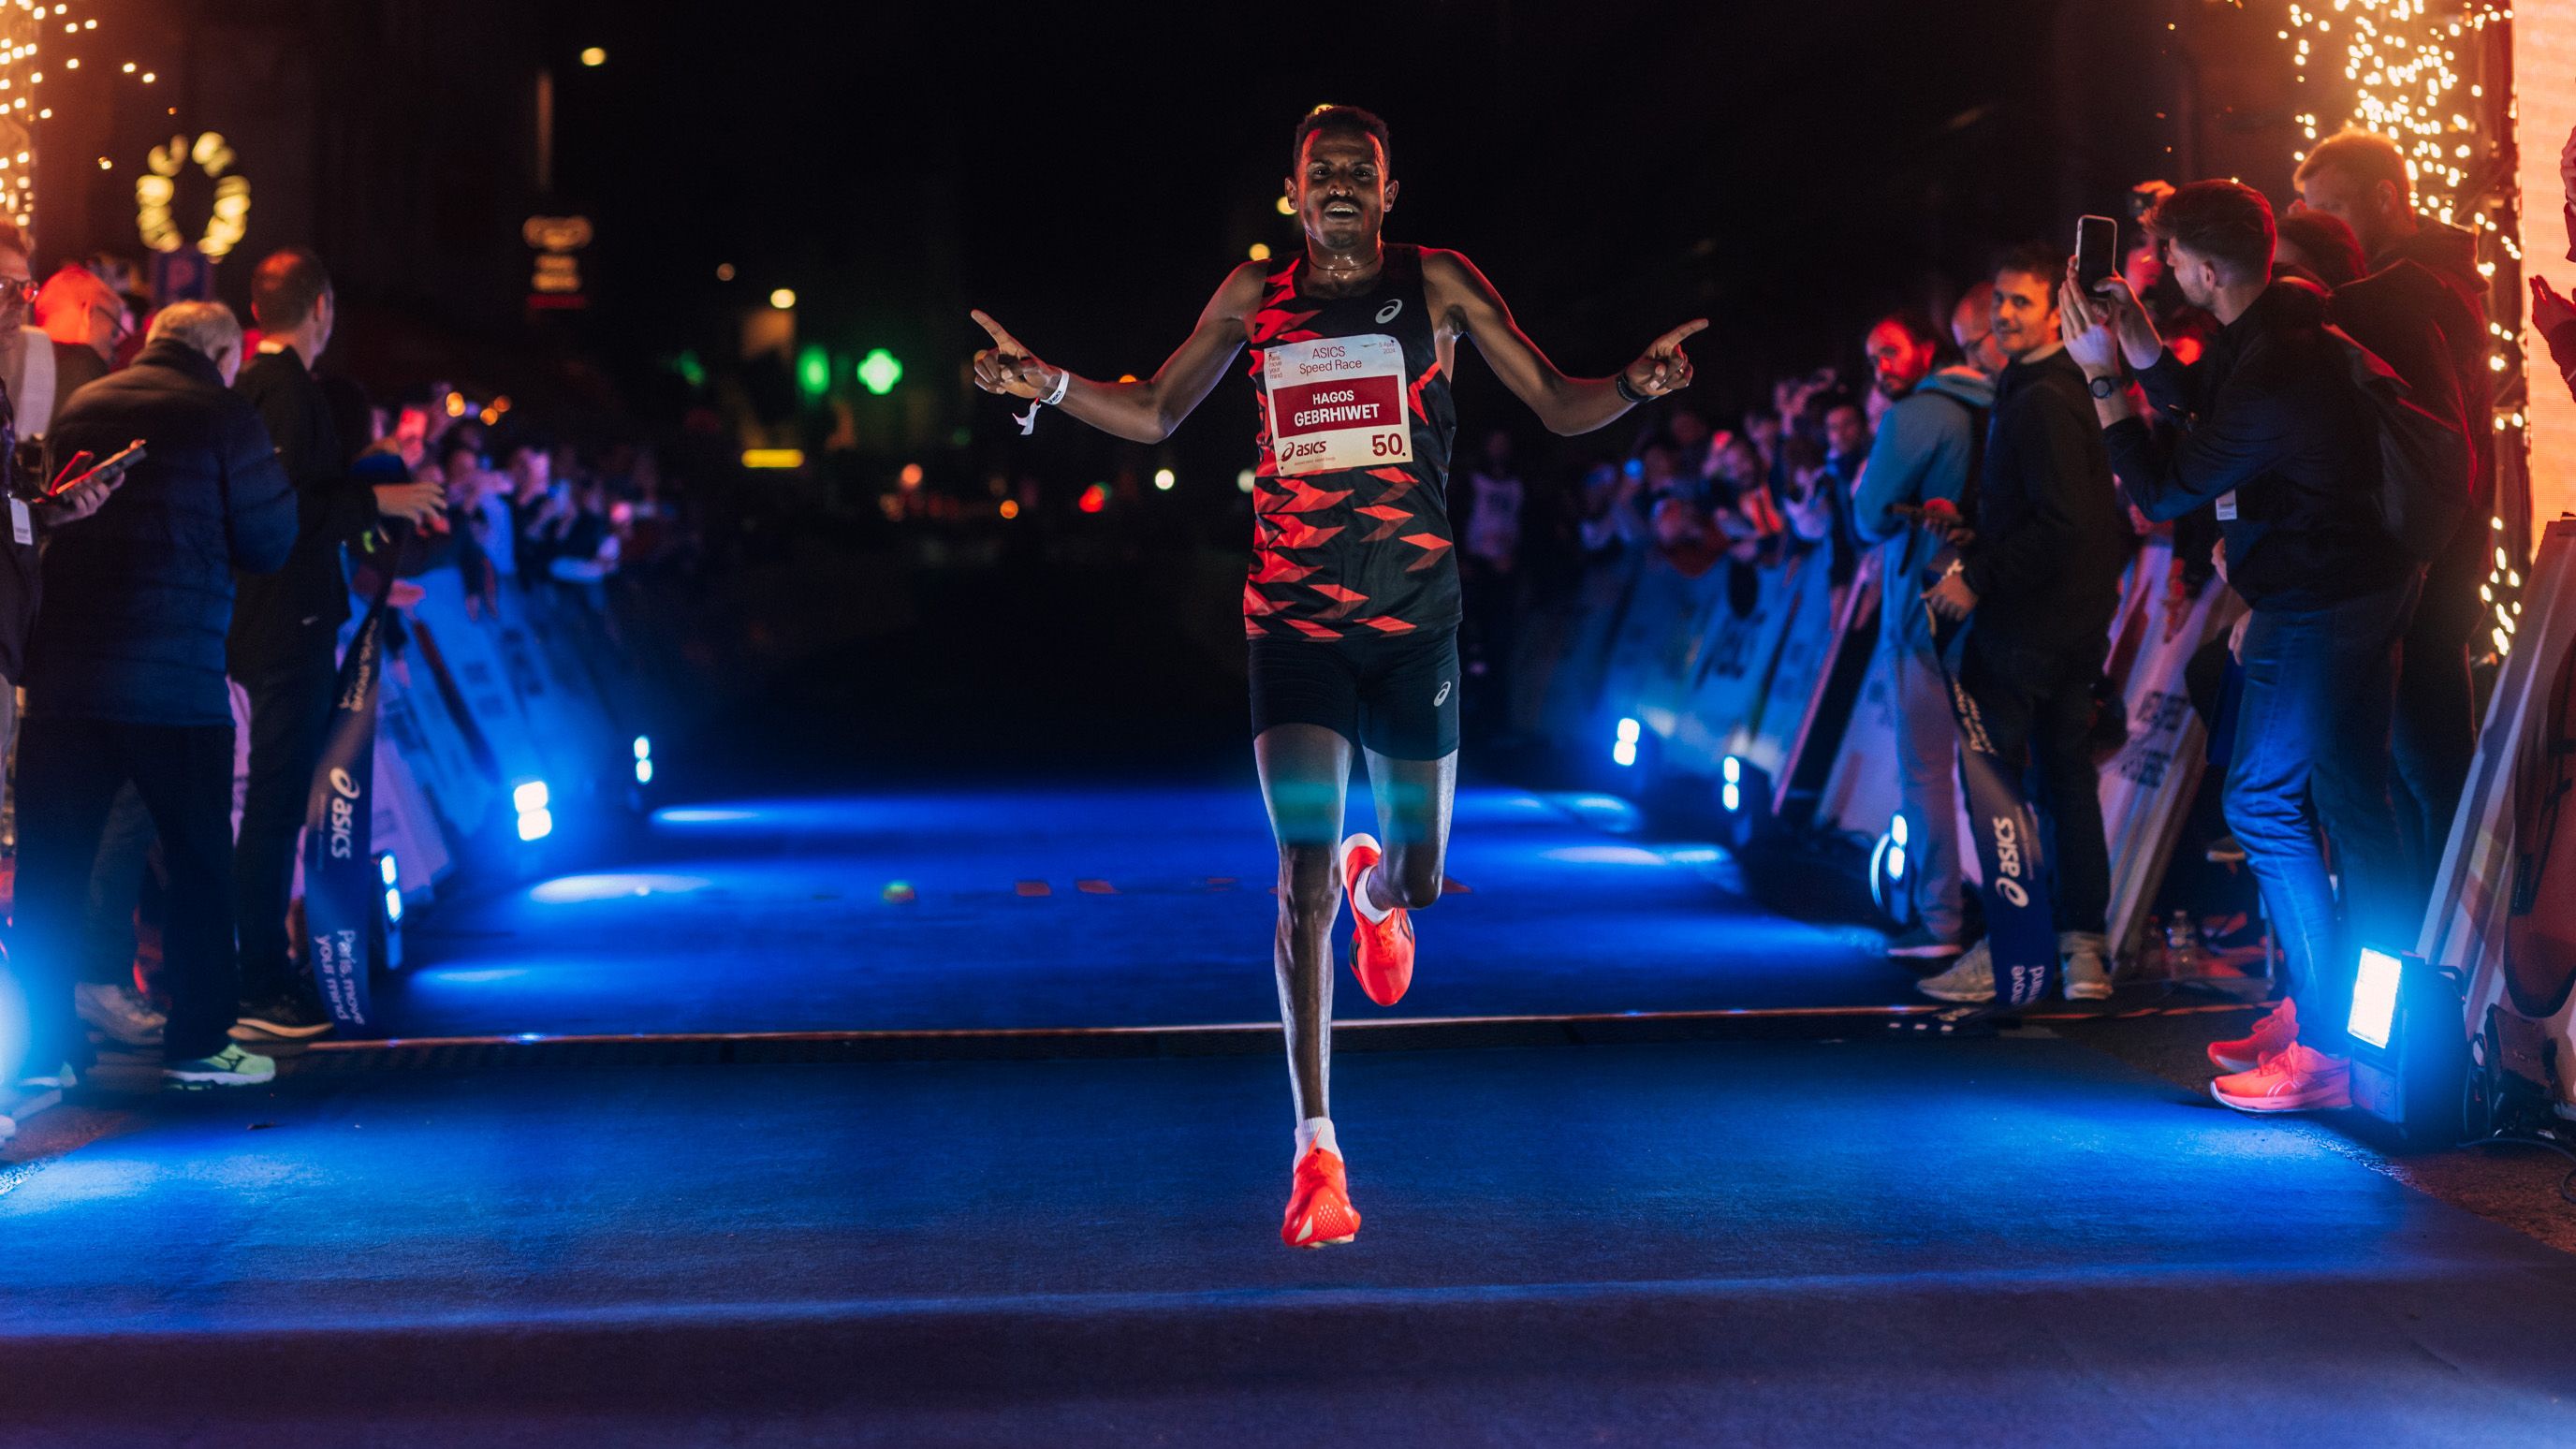 Hagos Gebrhiwet wins the 5km at the Paris Festival of Running